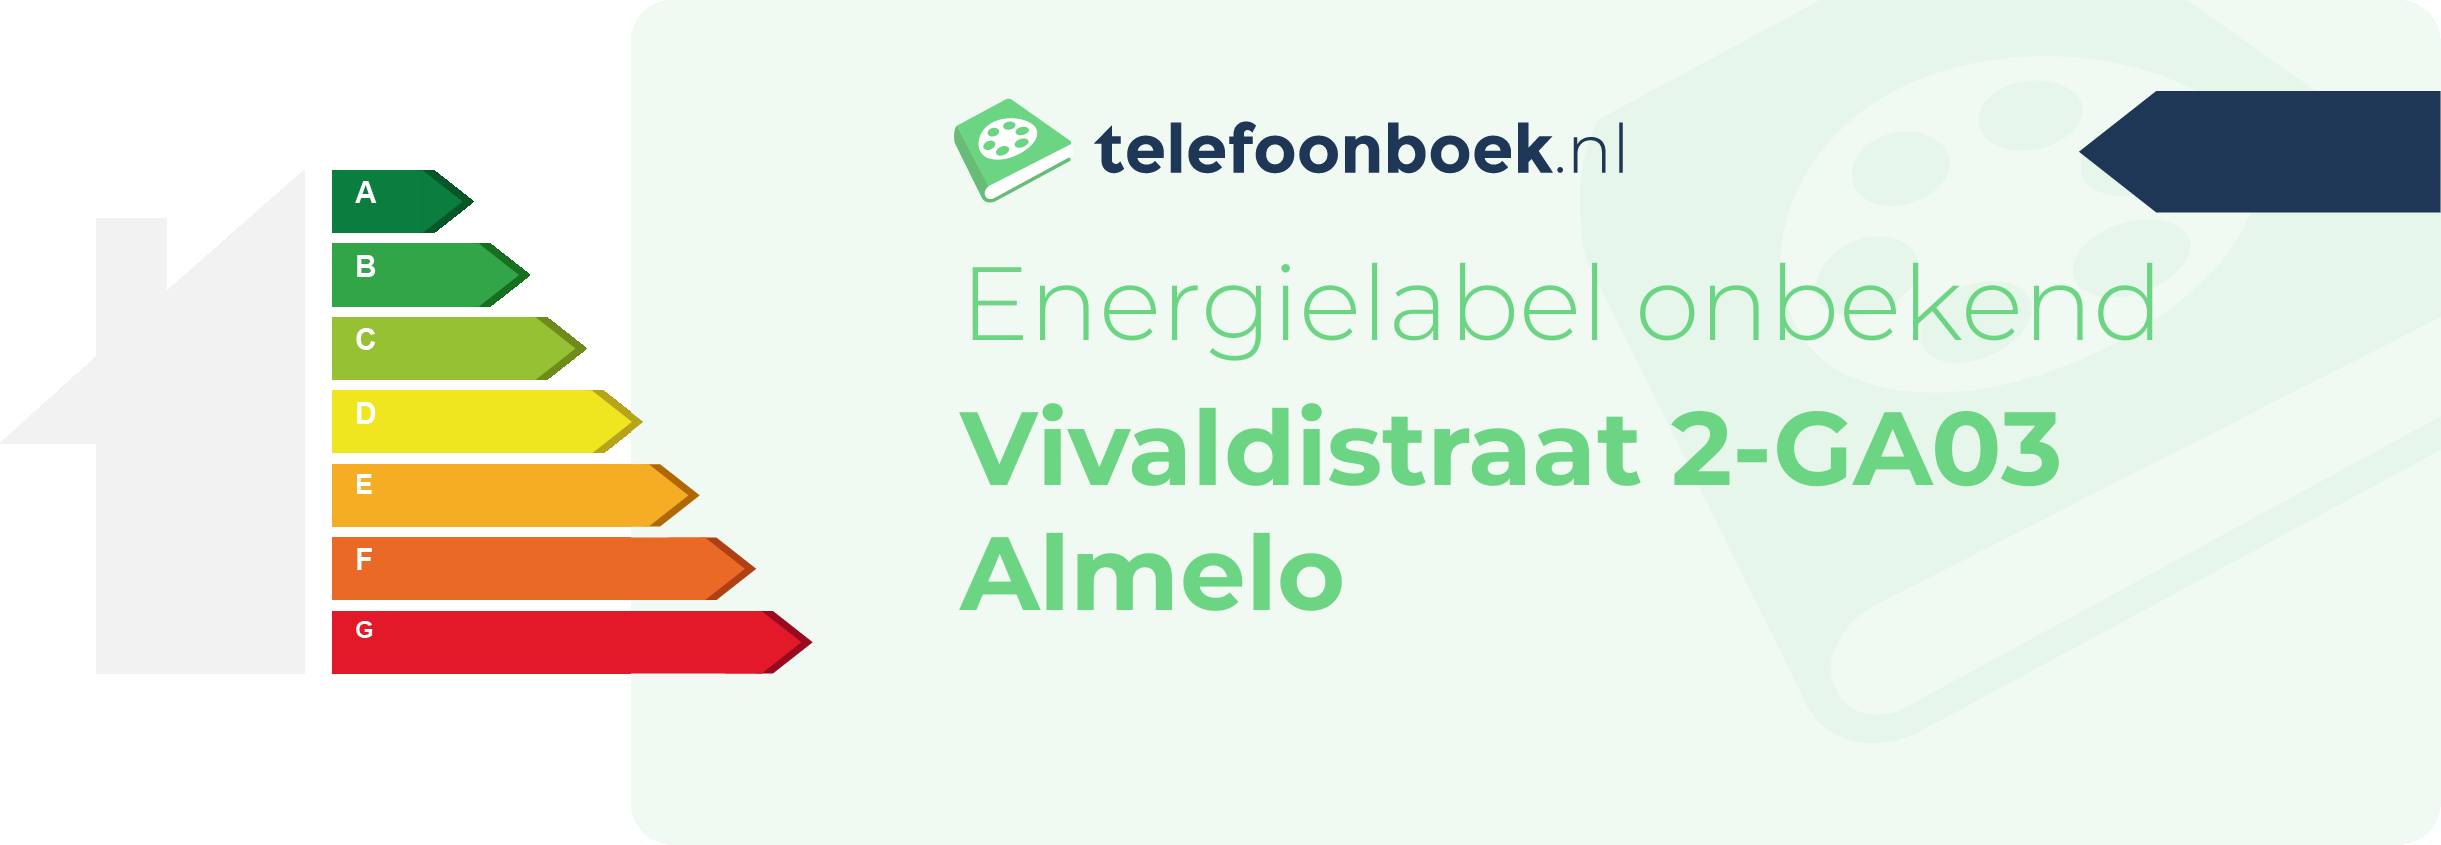 Energielabel Vivaldistraat 2-GA03 Almelo